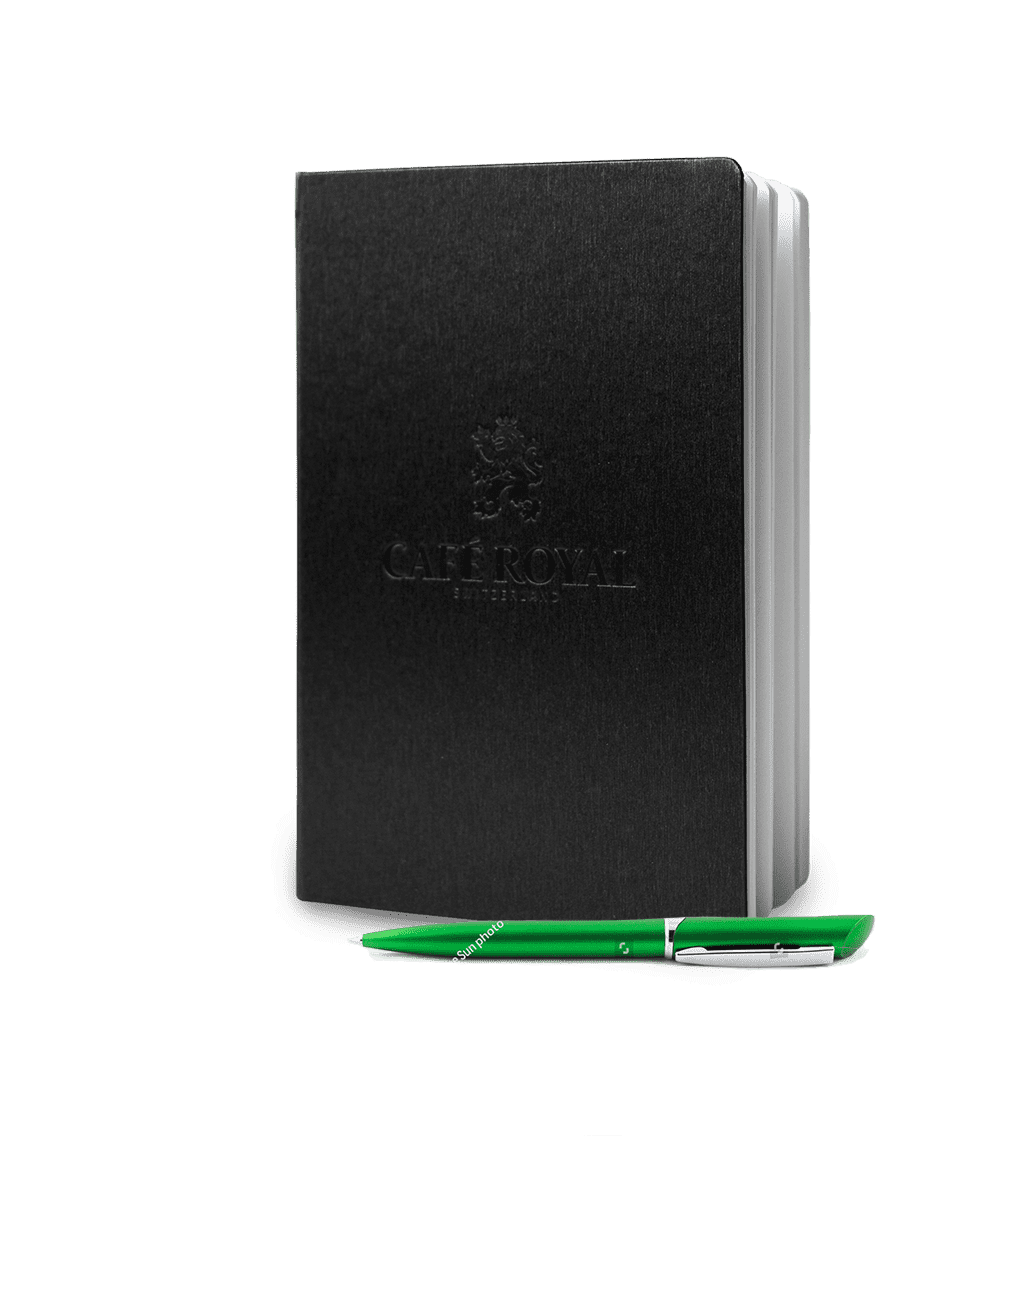 Café Royal Notebook